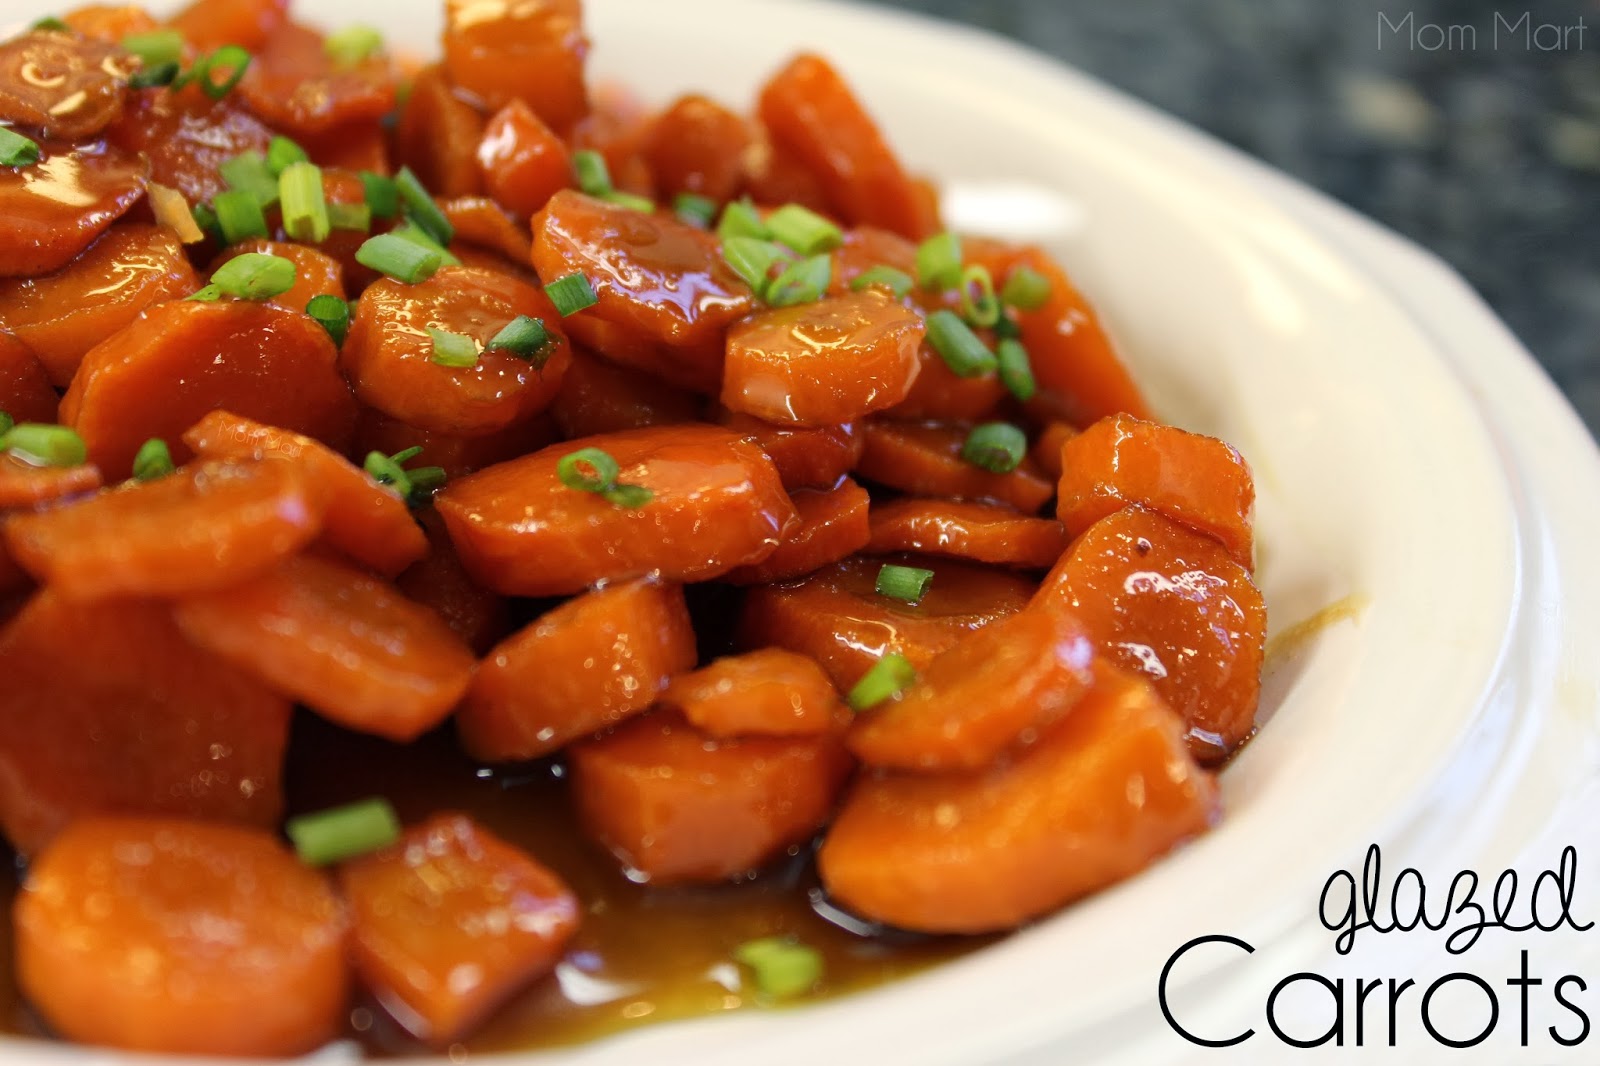   Wonderfully Simple Glazed Carrots #Recipe #WhatsForDinner #Foodie #YUM #Vegetable